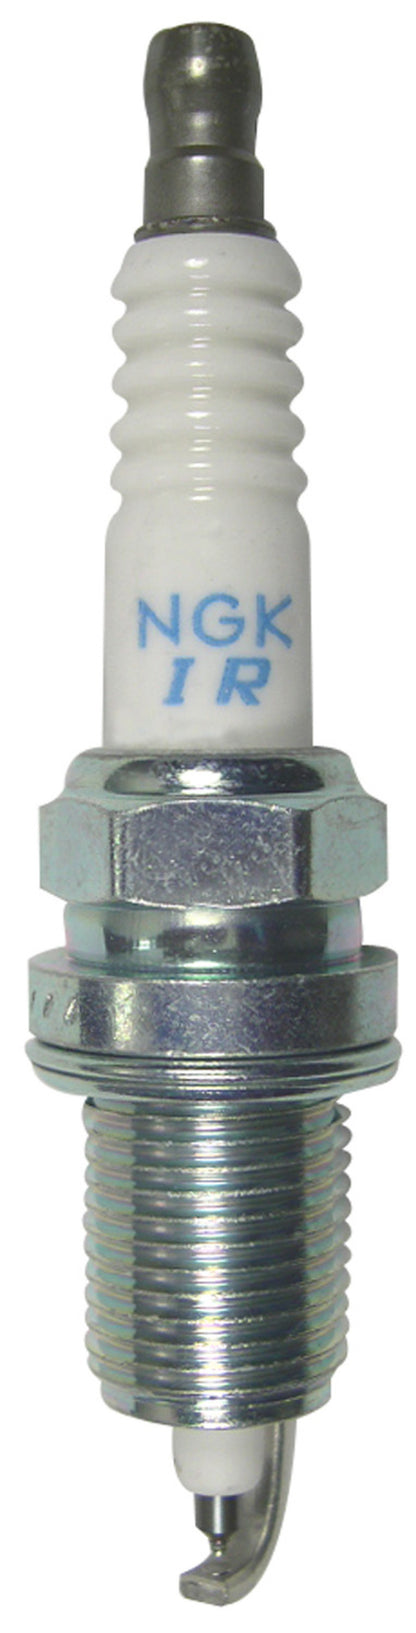 NGK Laser Iridium Spark Plug Box of 4 (IZFR6Q)